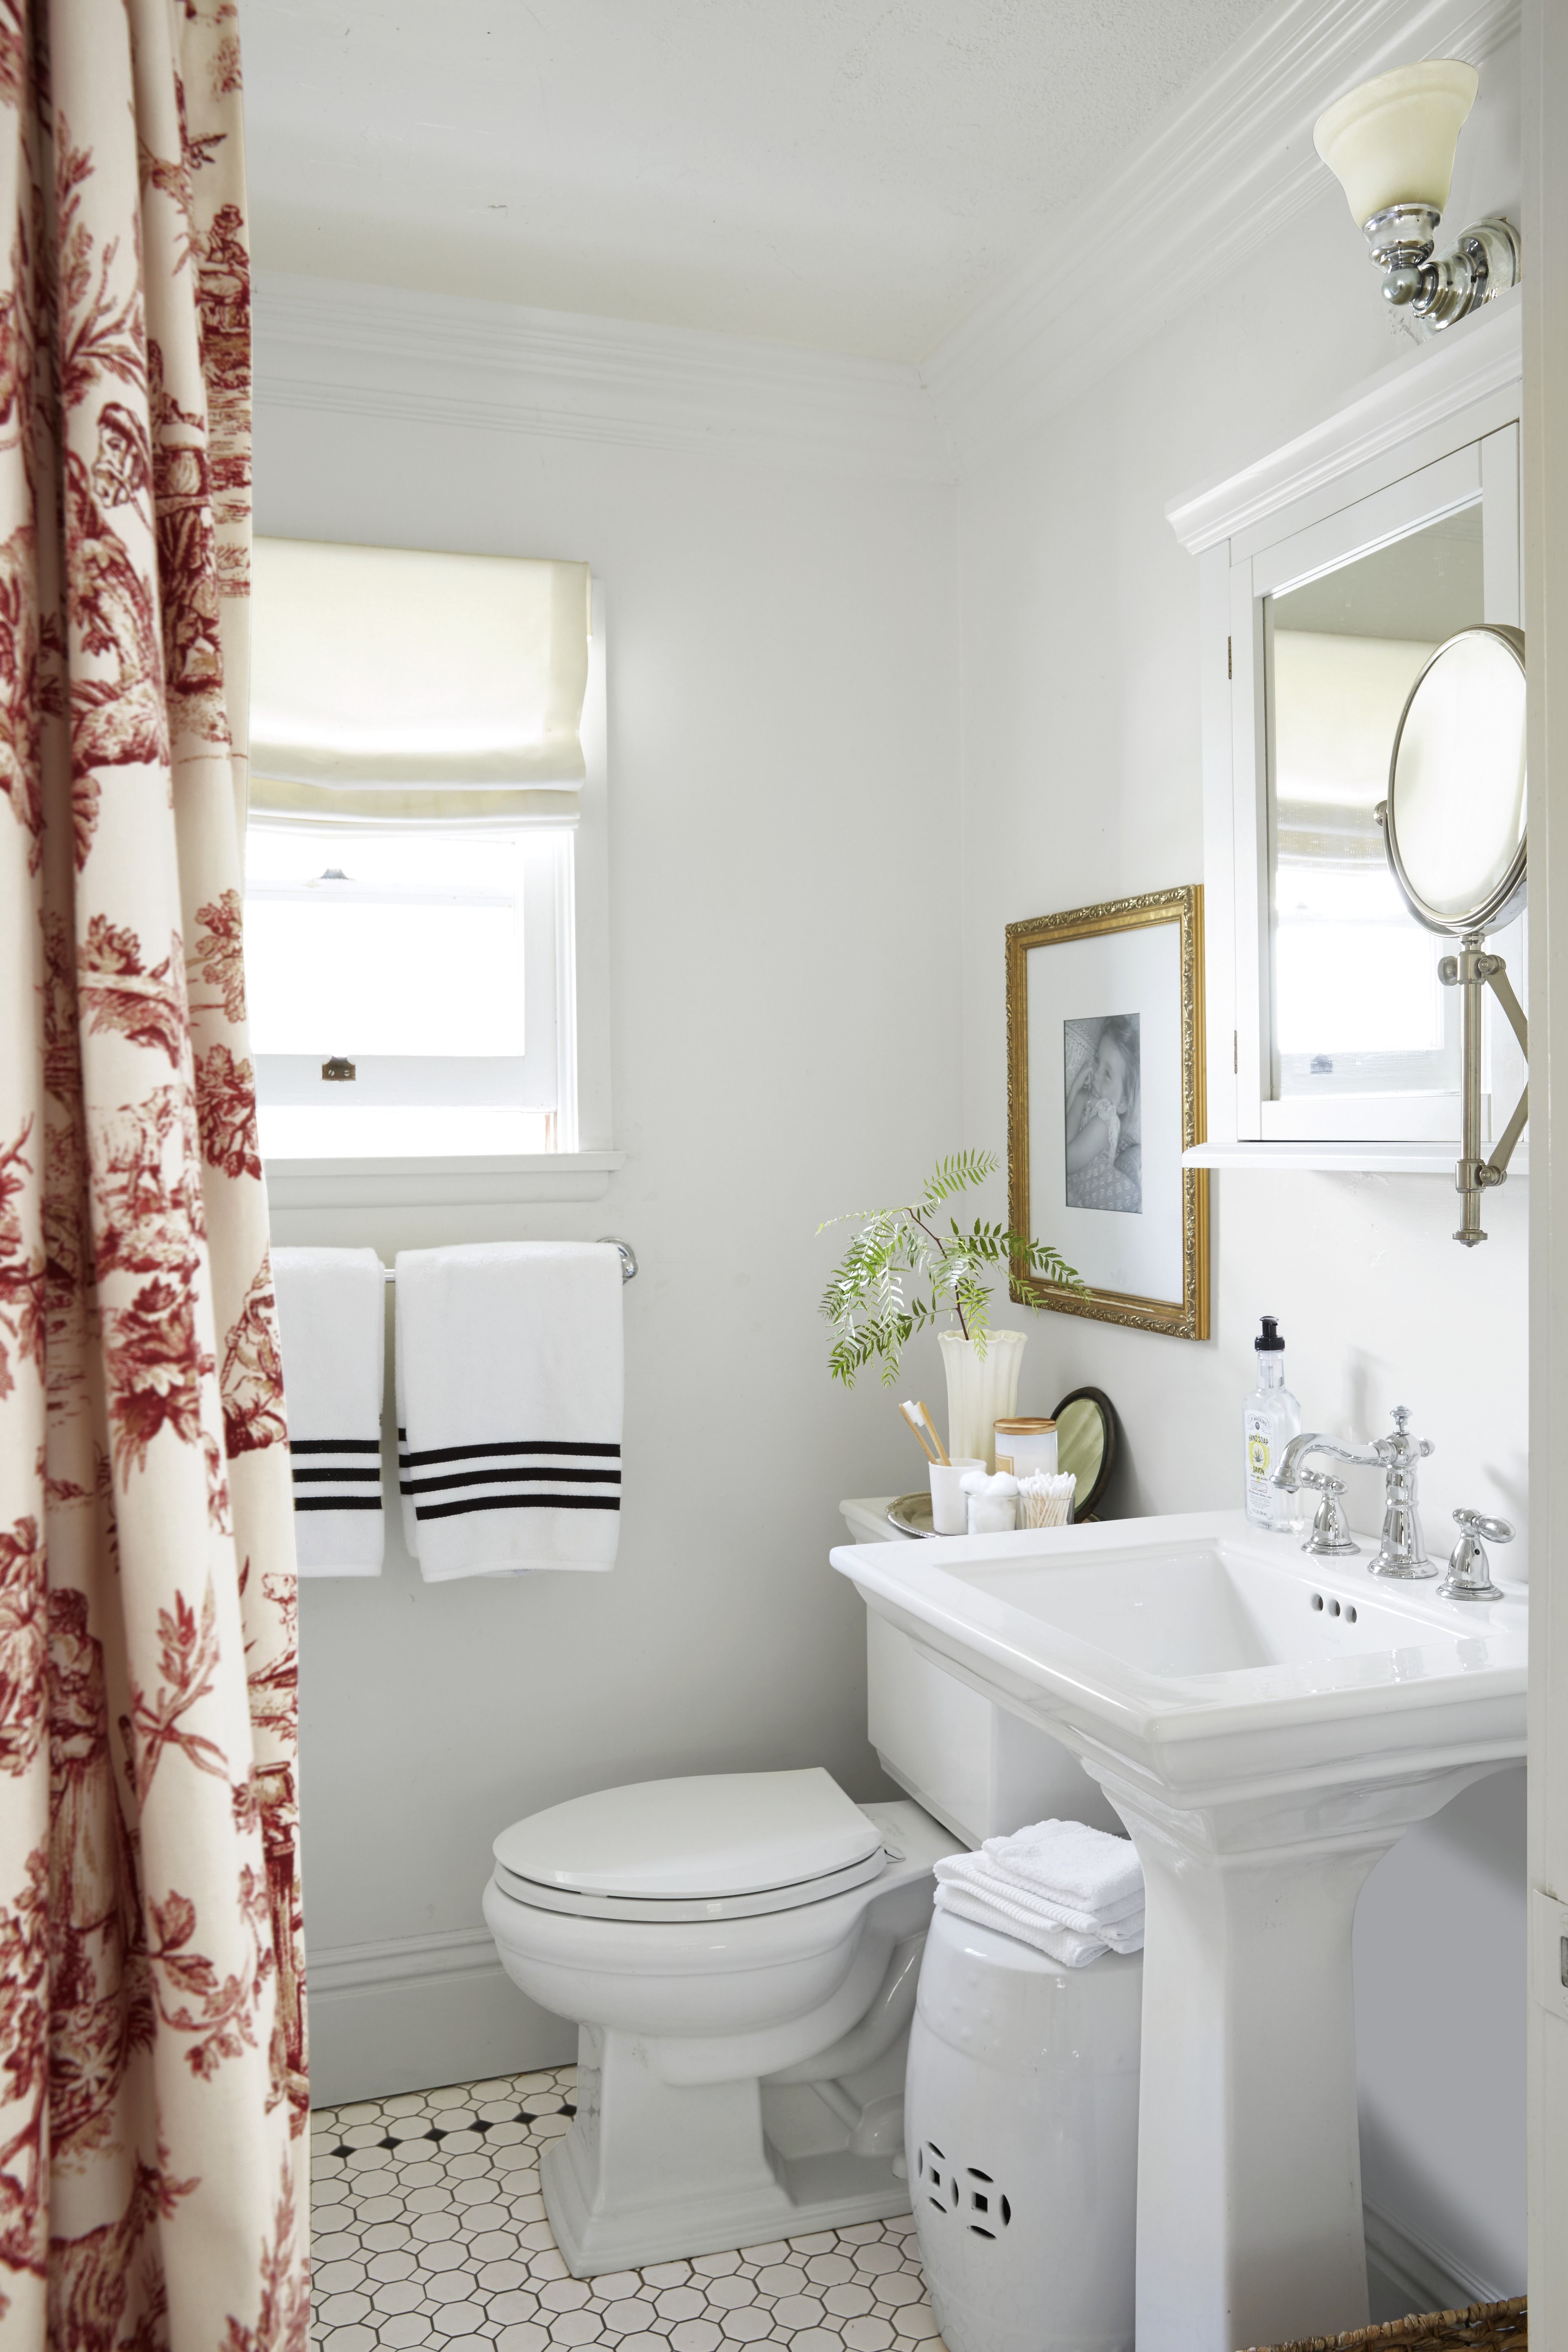 50 Bathroom Decorating Ideas Pictures Of Bathroom Decor And Designs